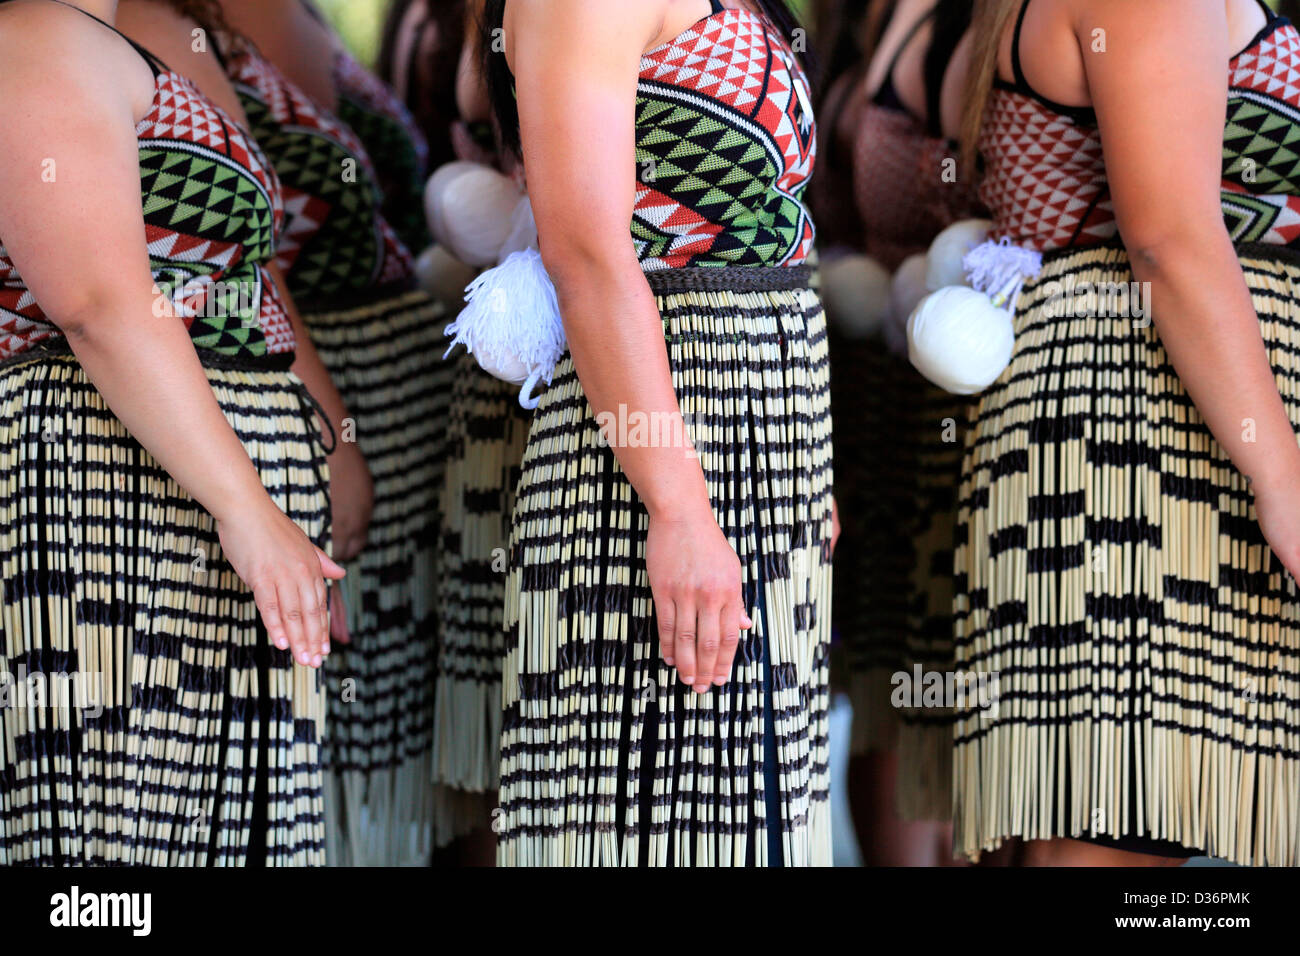 Weibliche Kapa Haka Group bei den Waitangi Treaty Grounds in Waitangi Day feiern. Stockfoto